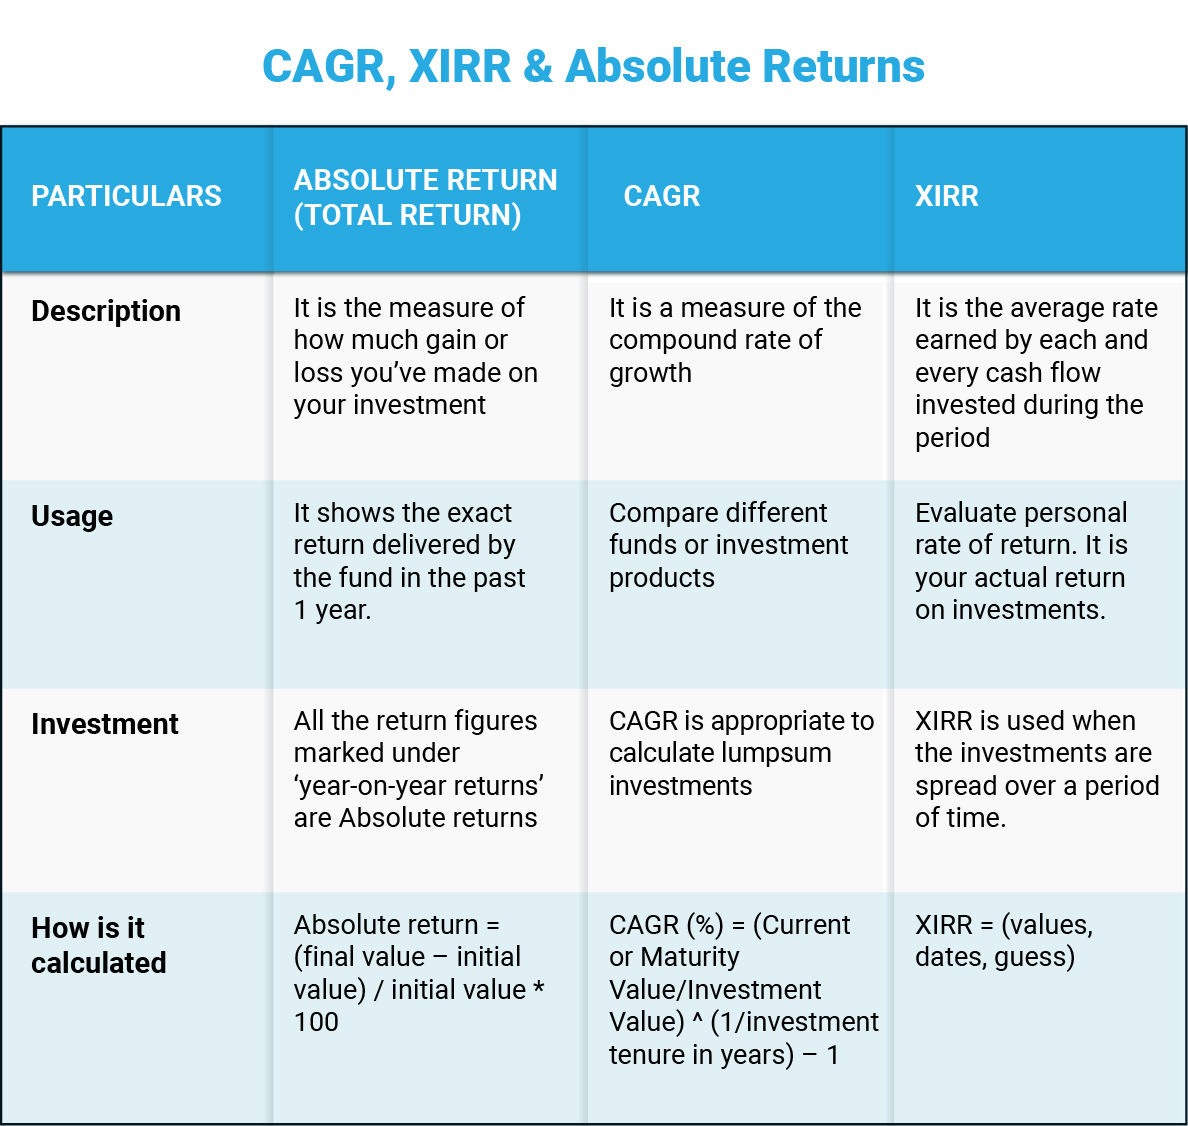 Absolute return, CAGR & XIRR